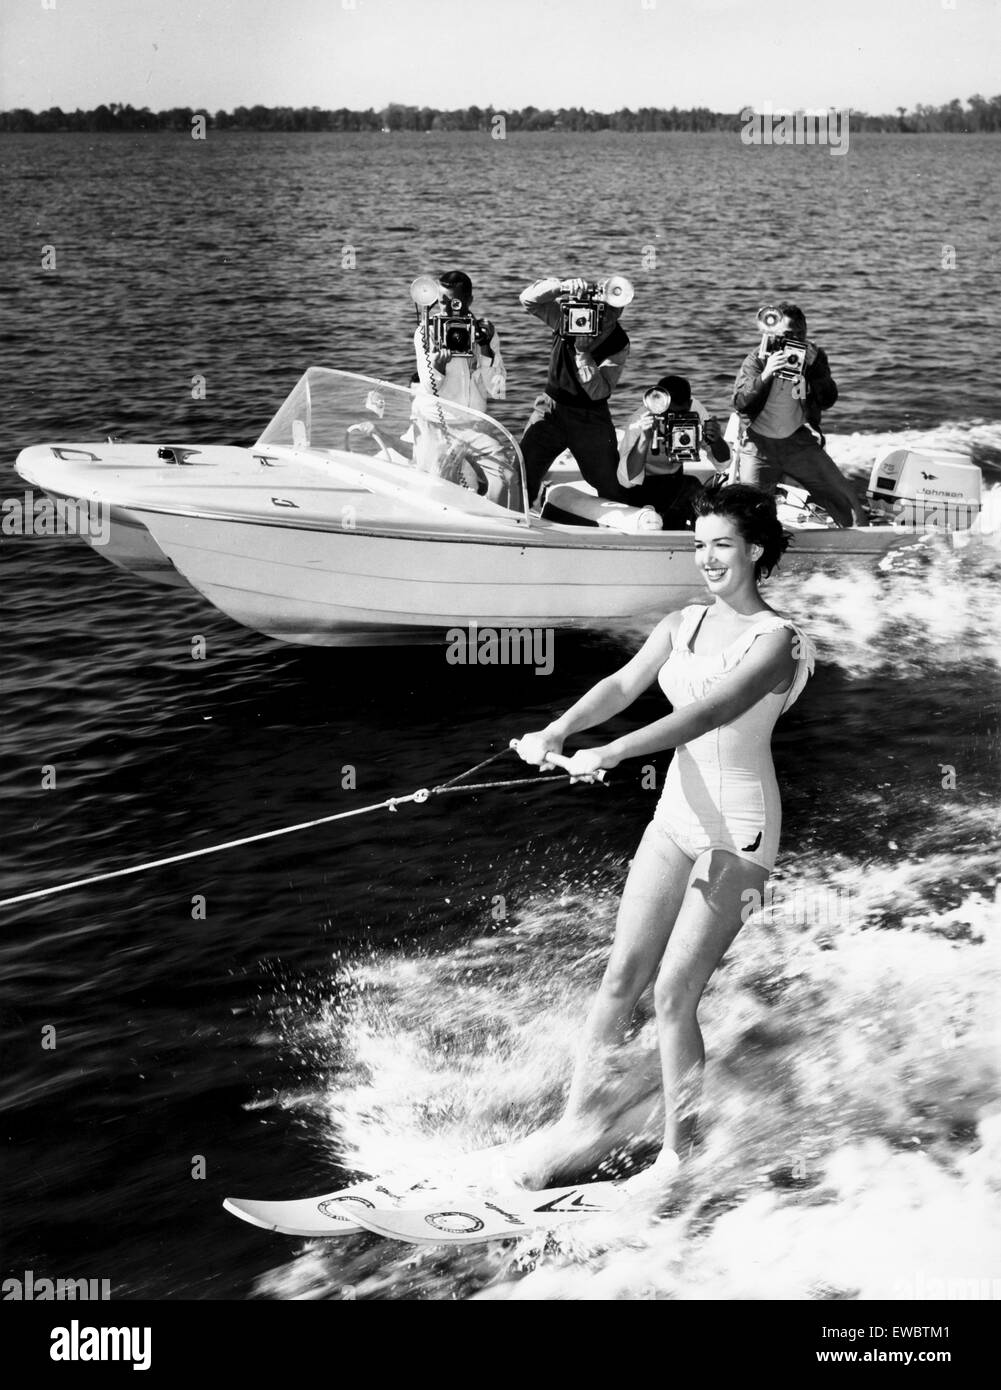 miss florida waterskiing and paparazzi,1962 Stock Photo